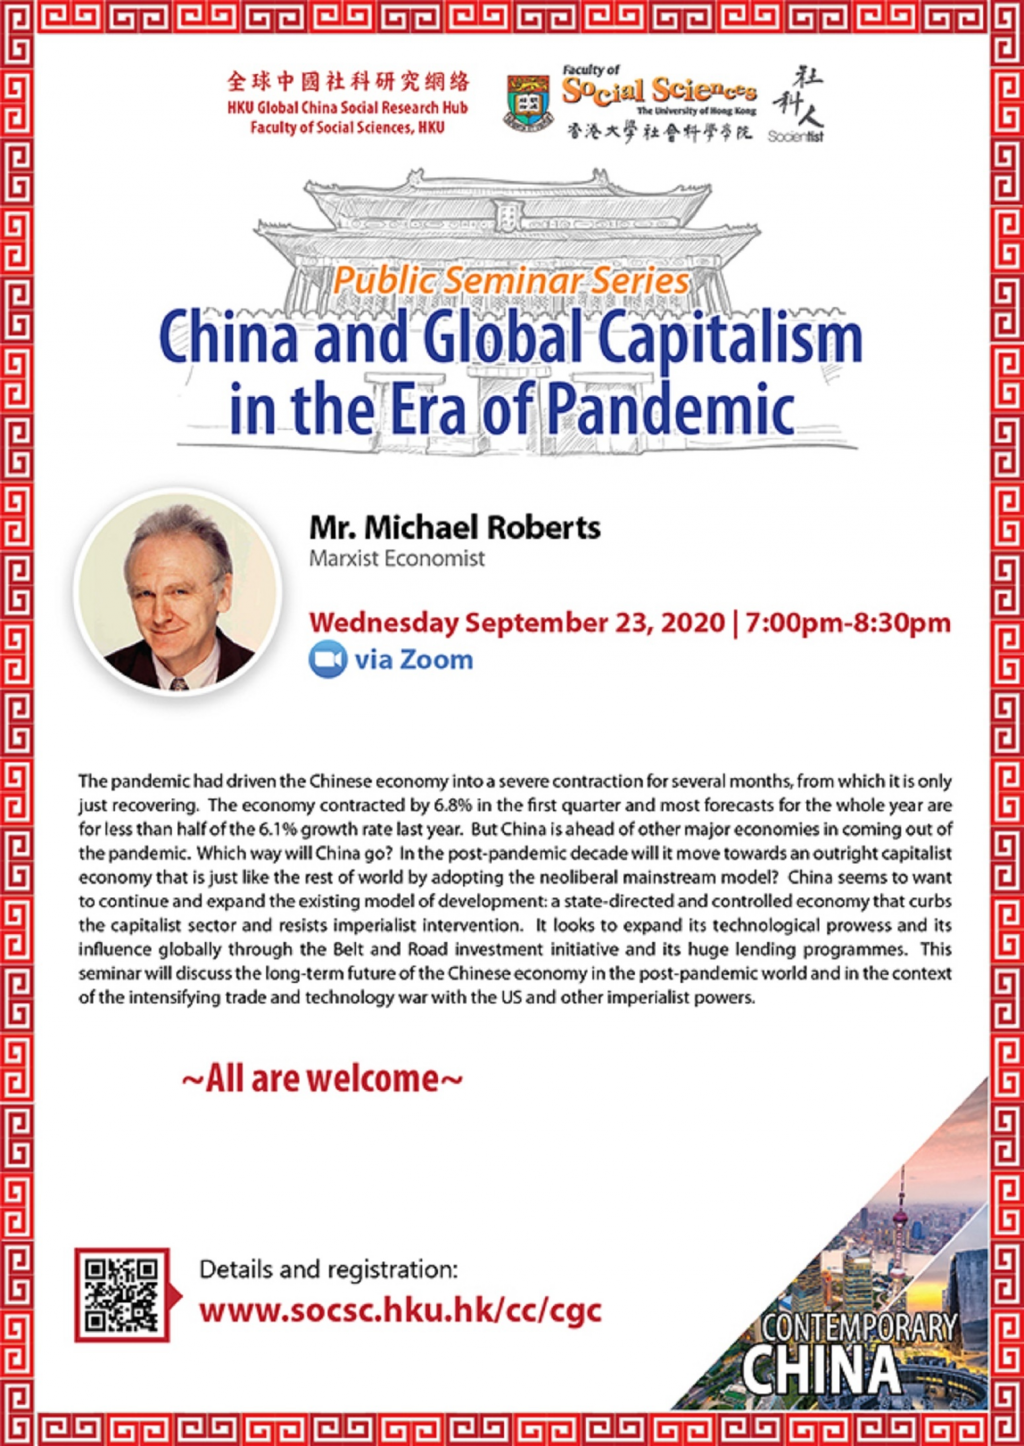 Global China Social Research Hub Public Seminar Series: China and Global Capitalism in the Era of Pandemic